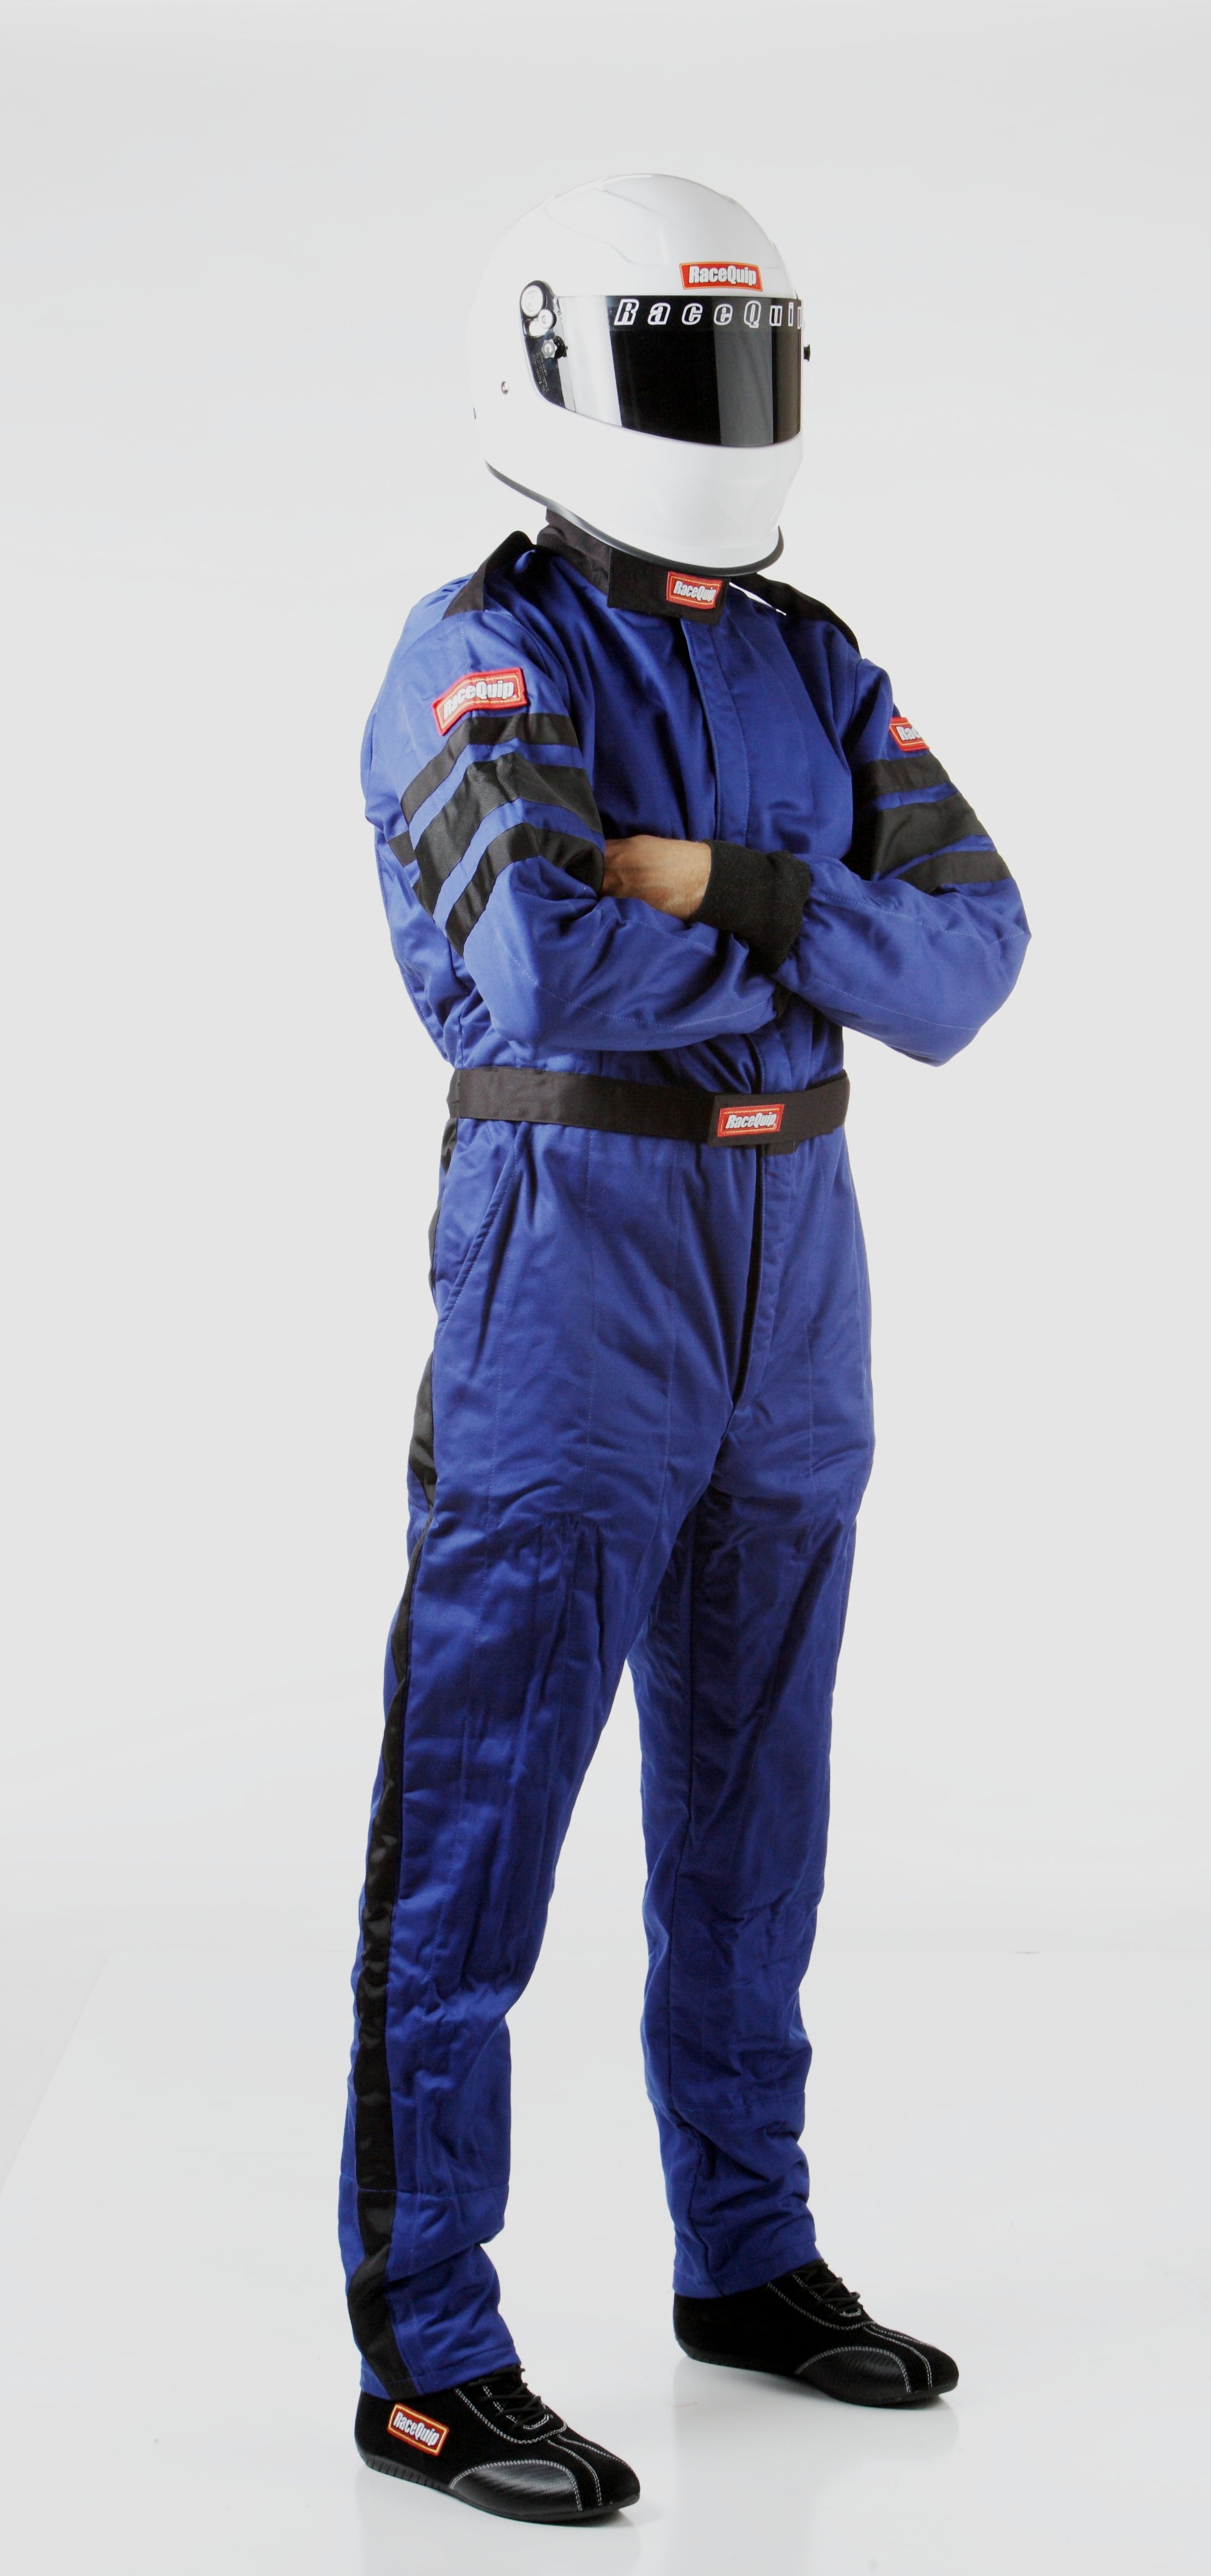 RaceQuip 120024 SFI-5 Pyrovatex One-Piece Multi-Layer Racing Fire Suit (Blue, Medium-Tall)